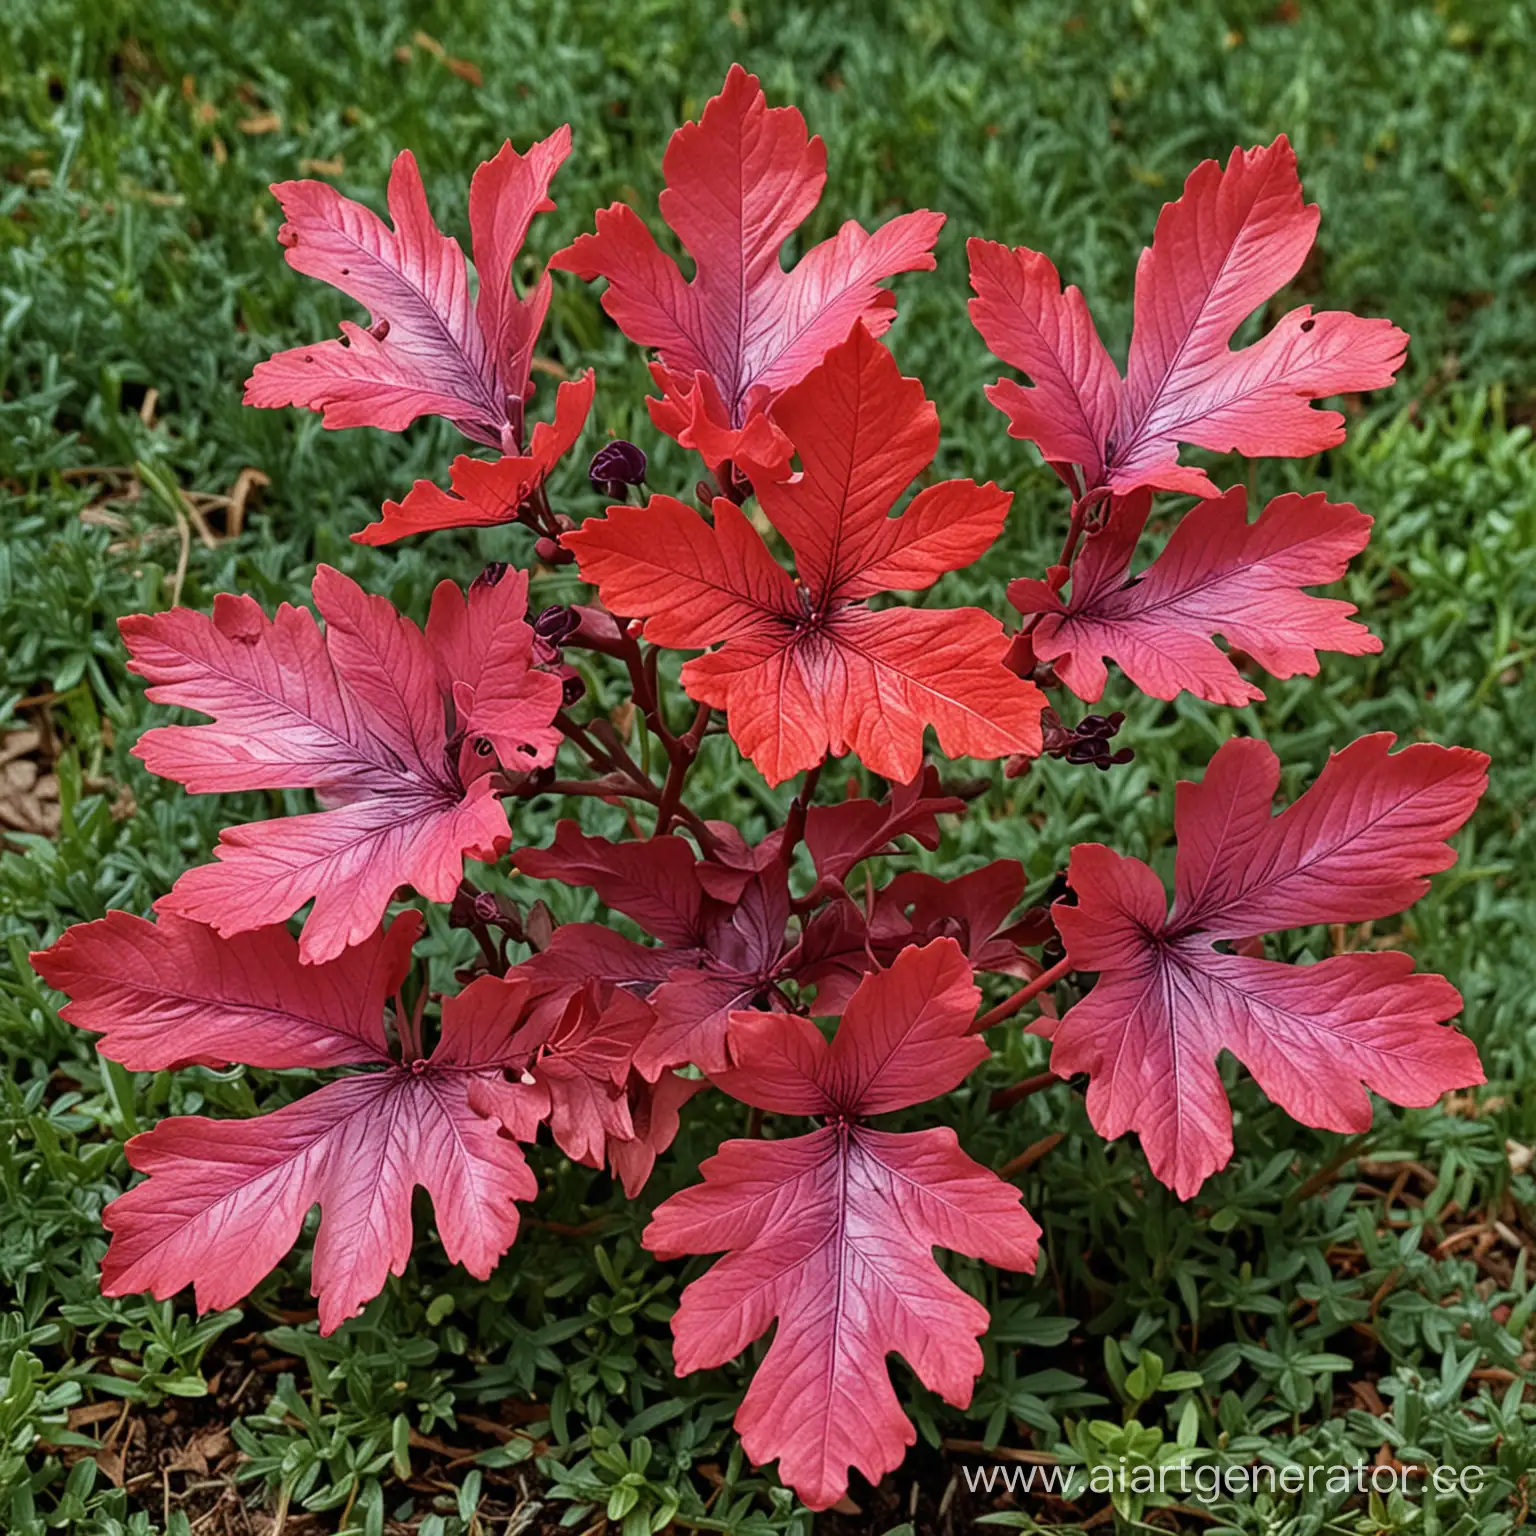 Vibrant-Oak-Leaf-Shaped-Flowers-Unique-Red-and-Pink-Floral-Arrangement